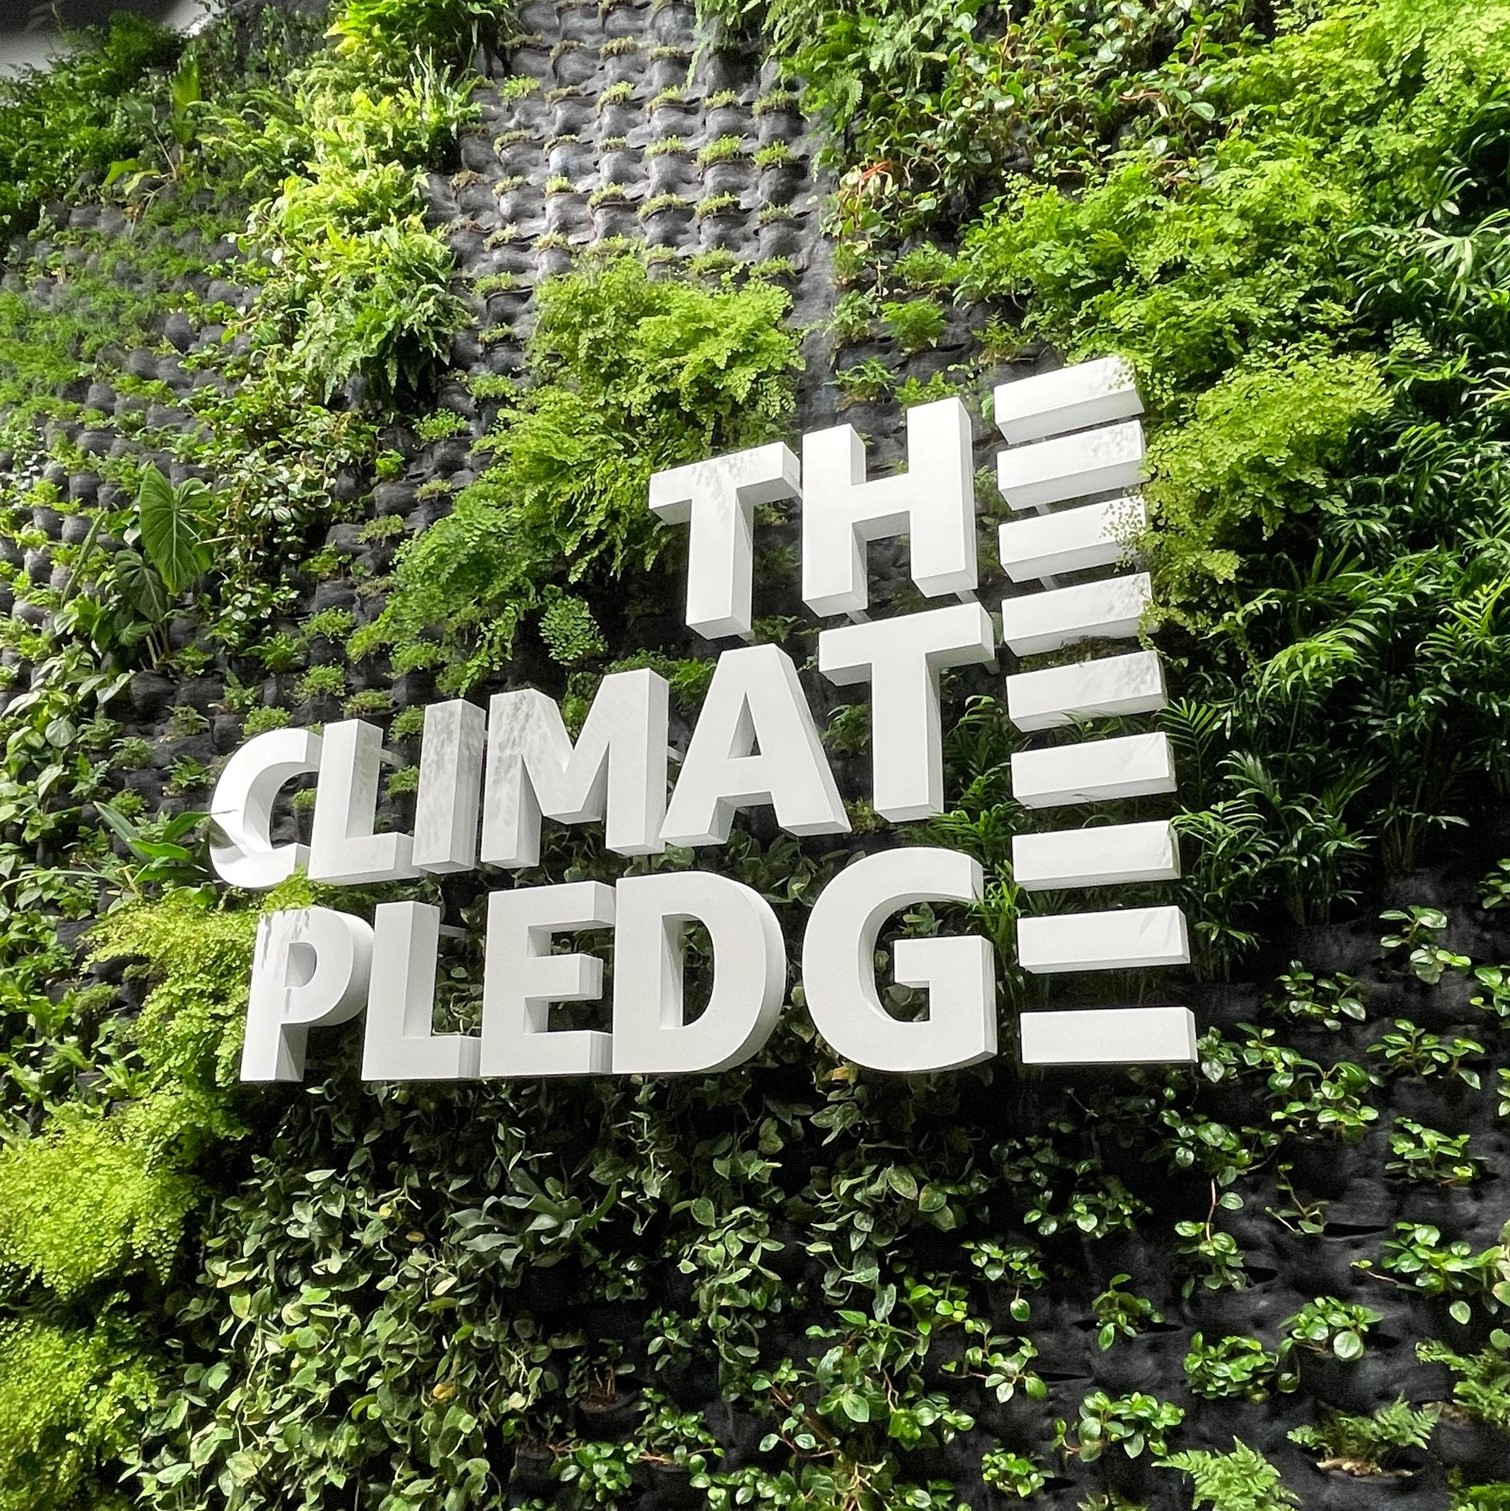 Seattle Kraken – Climate Pledge Arena